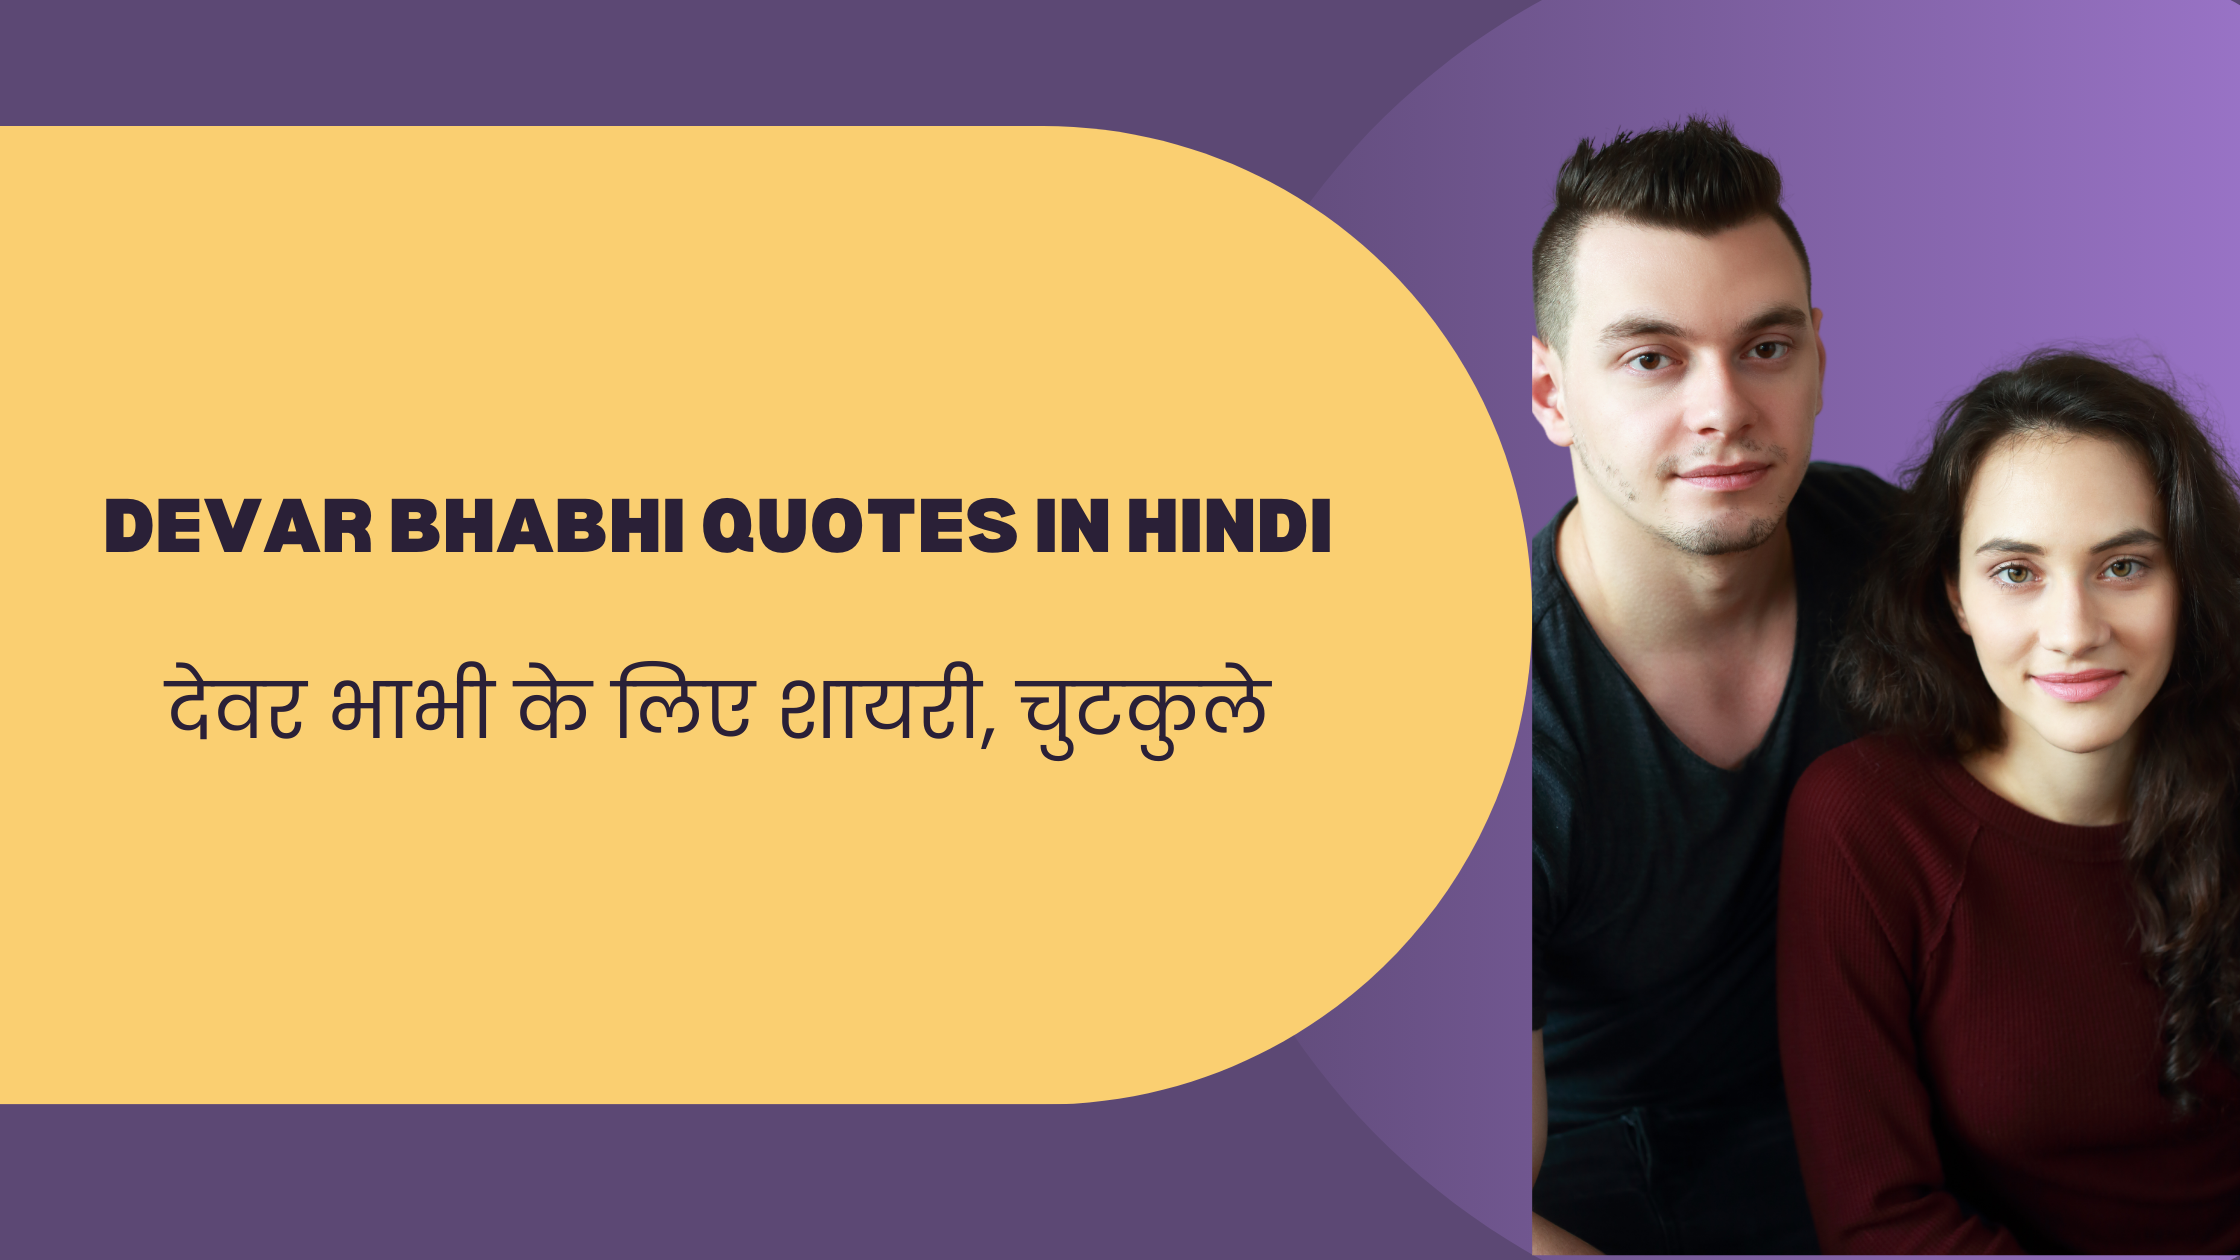 Devar Bhabhi Quotes in HindI